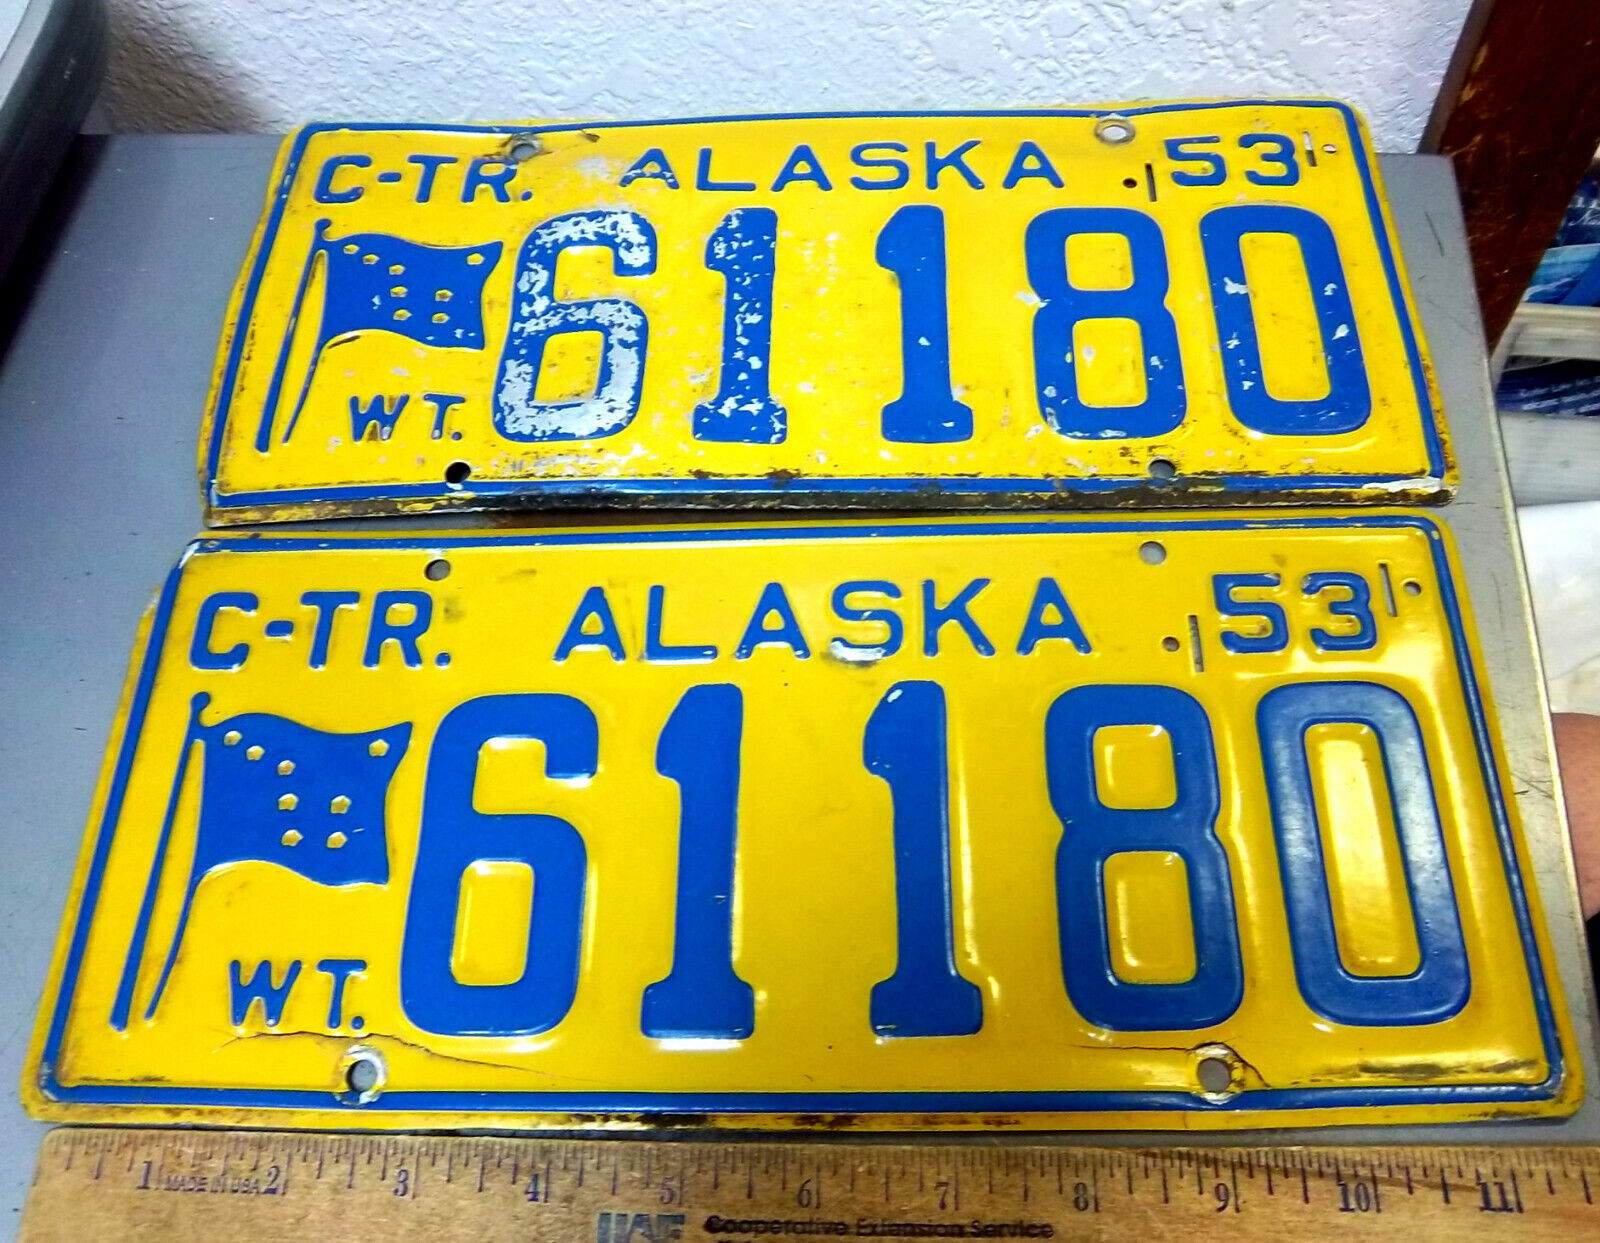 Alaska License Plate 1953 issue set of 2 plates, C-TR wt 61180, hard to find set